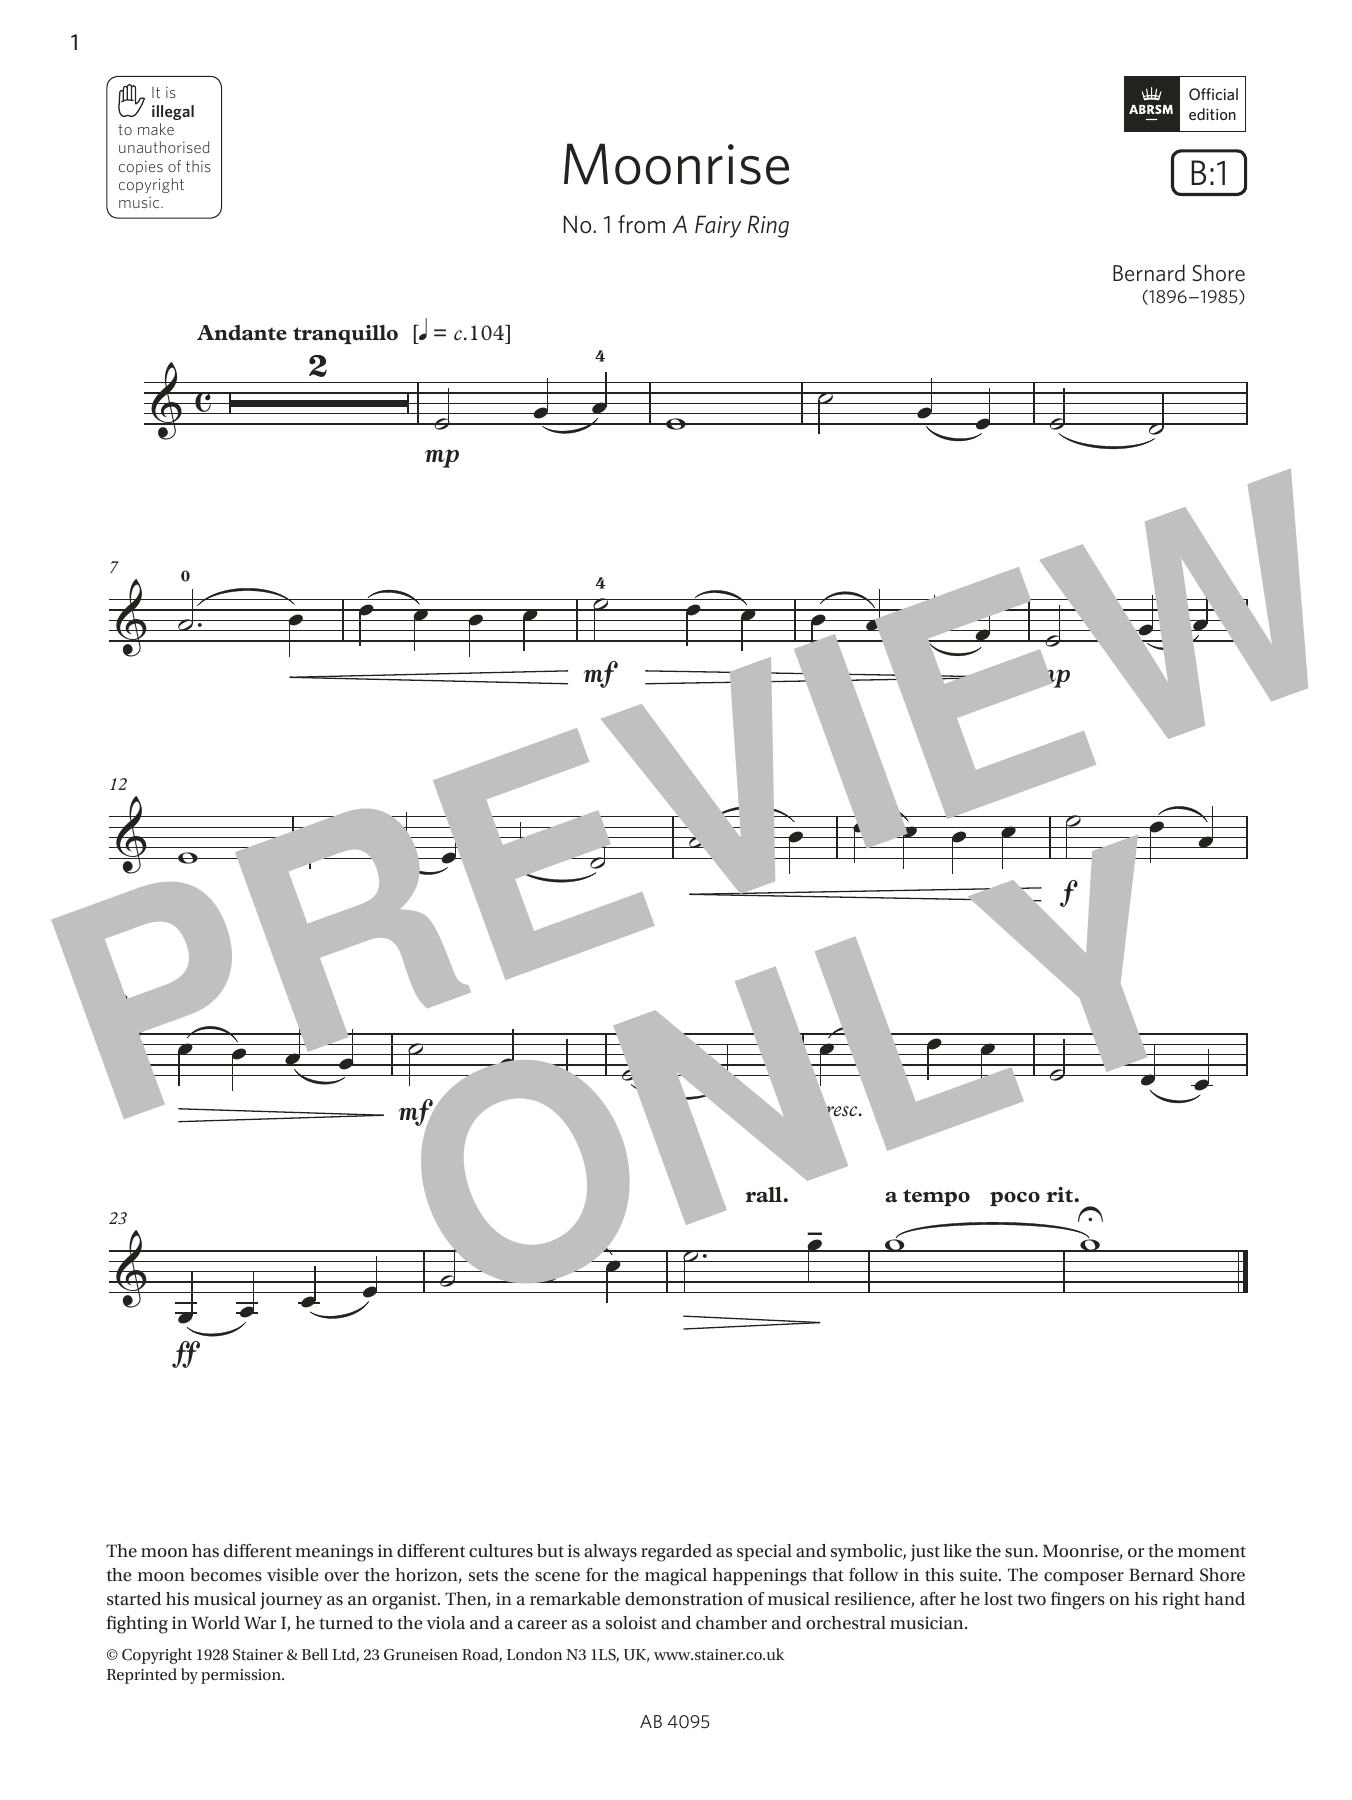 Bernard Shore Moonrise (Grade 1, B1, from the ABRSM Violin Syllabus from 2024) Sheet Music Notes & Chords for Violin Solo - Download or Print PDF